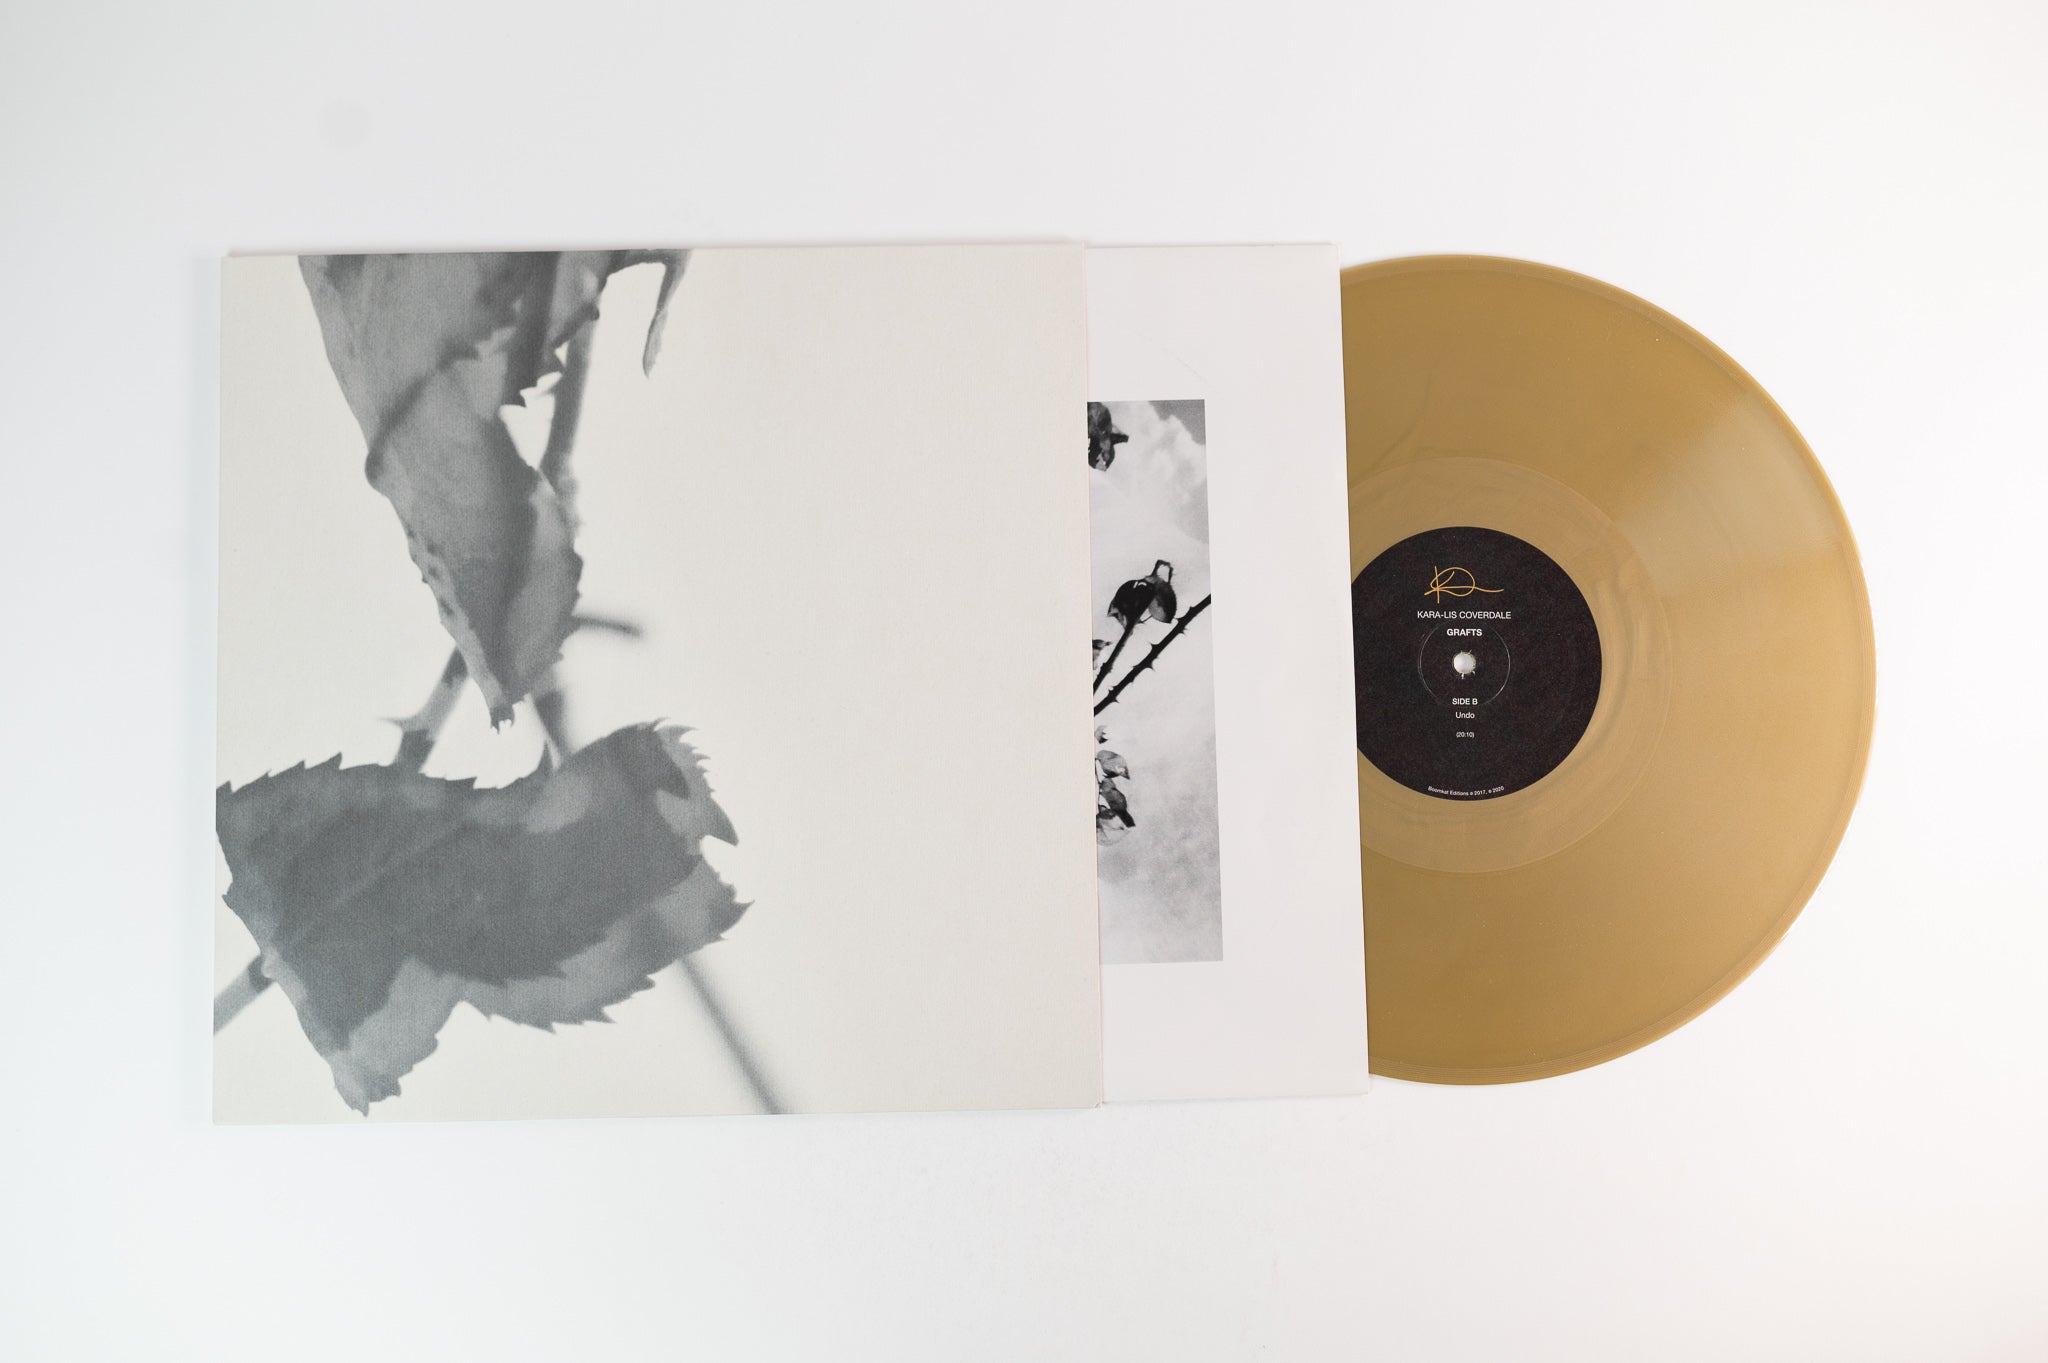 Kara-Lis Coverdale - Grafts on BoomKats Extended Edition Gold Vinyl Reissue